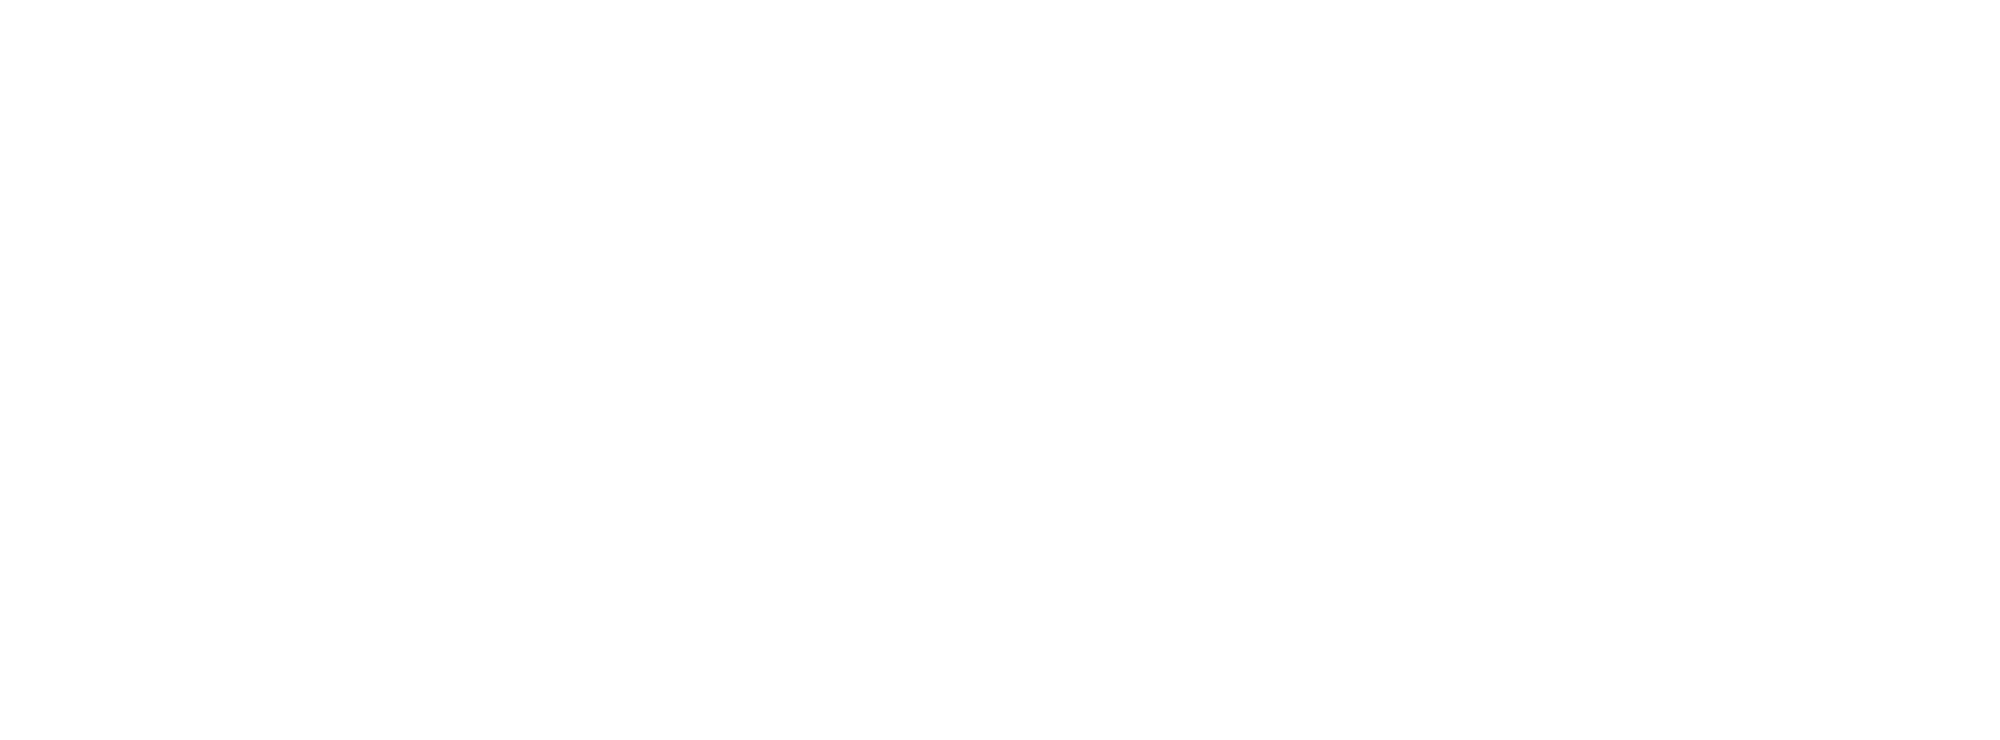 ECS Clinical